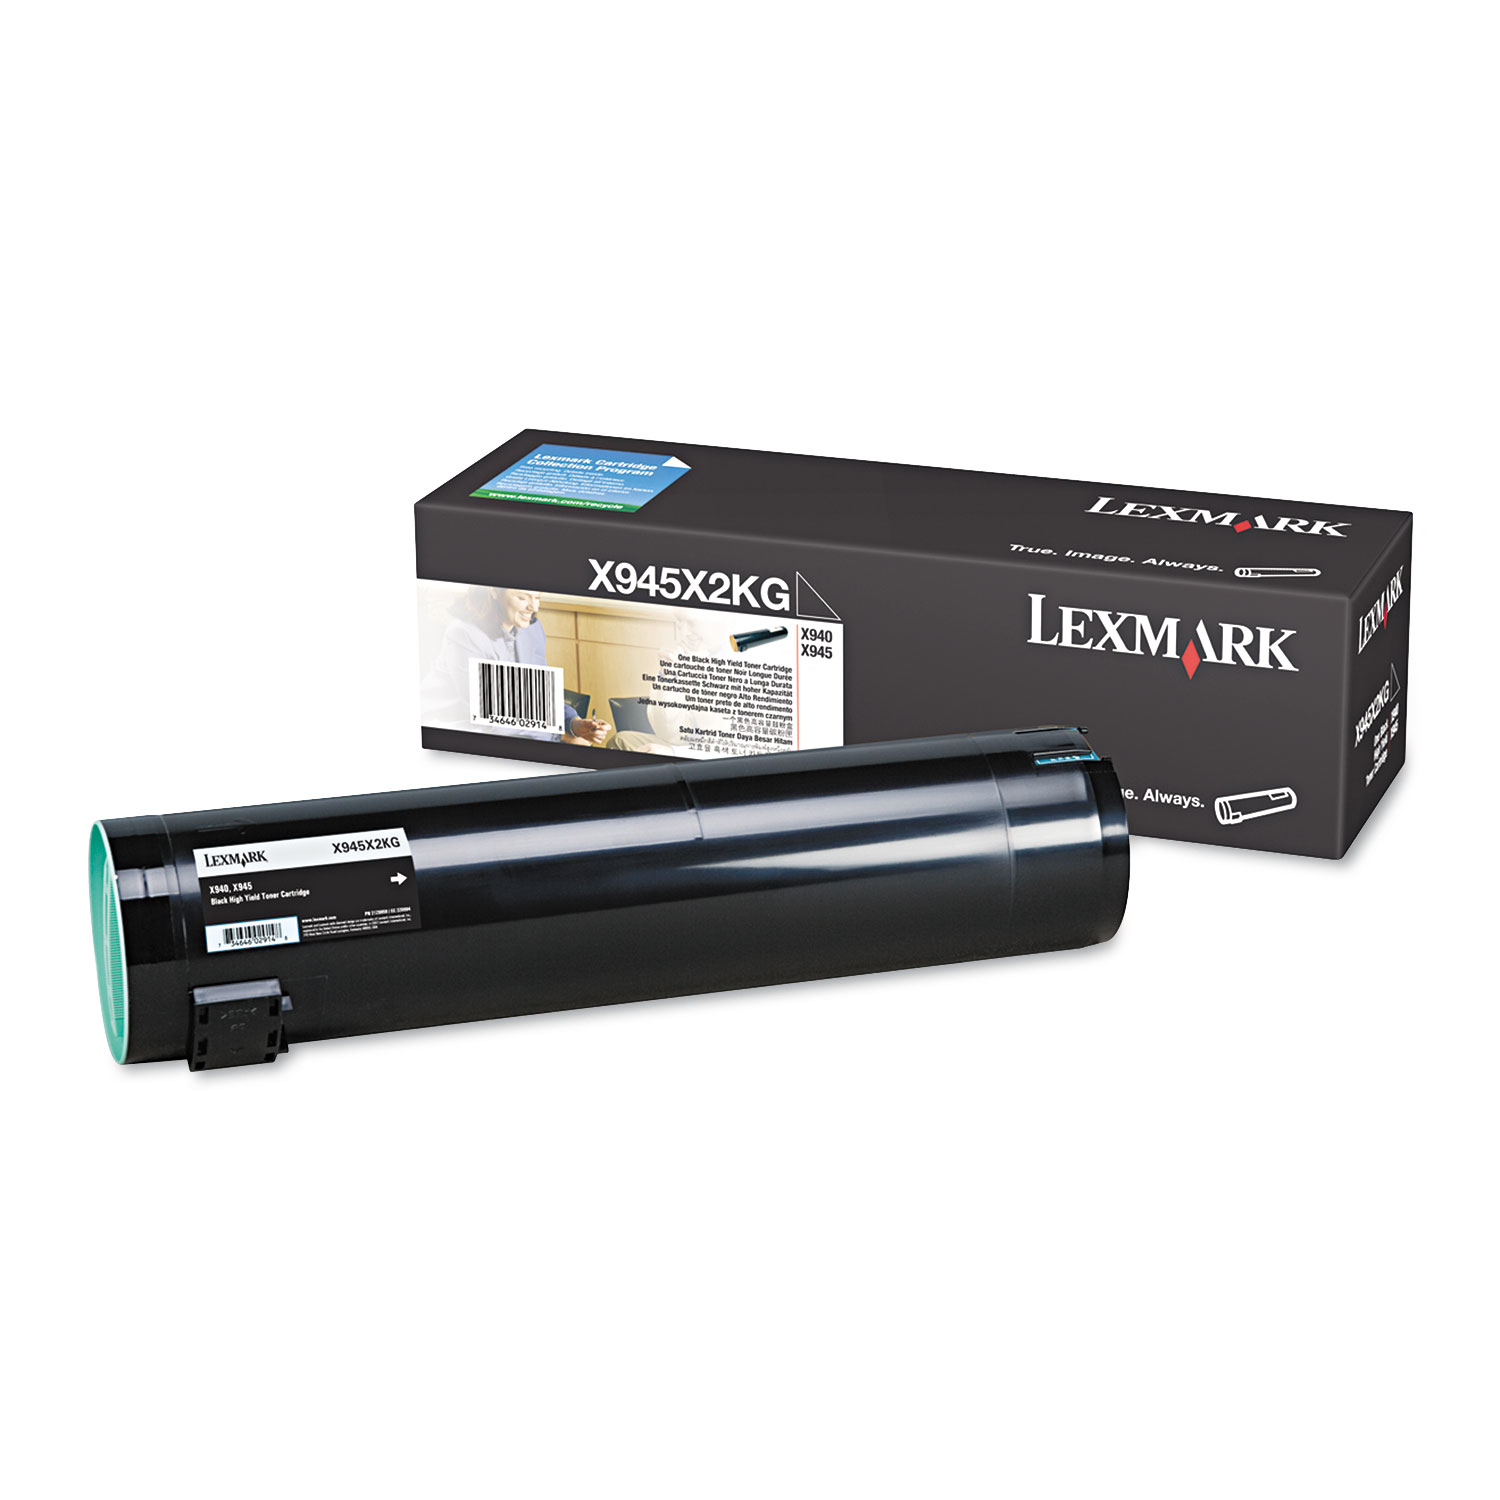  Lexmark X945X2KG X945X2KG High-Yield Toner, 36000 Page-Yield, Black (LEXX945X2KG) 